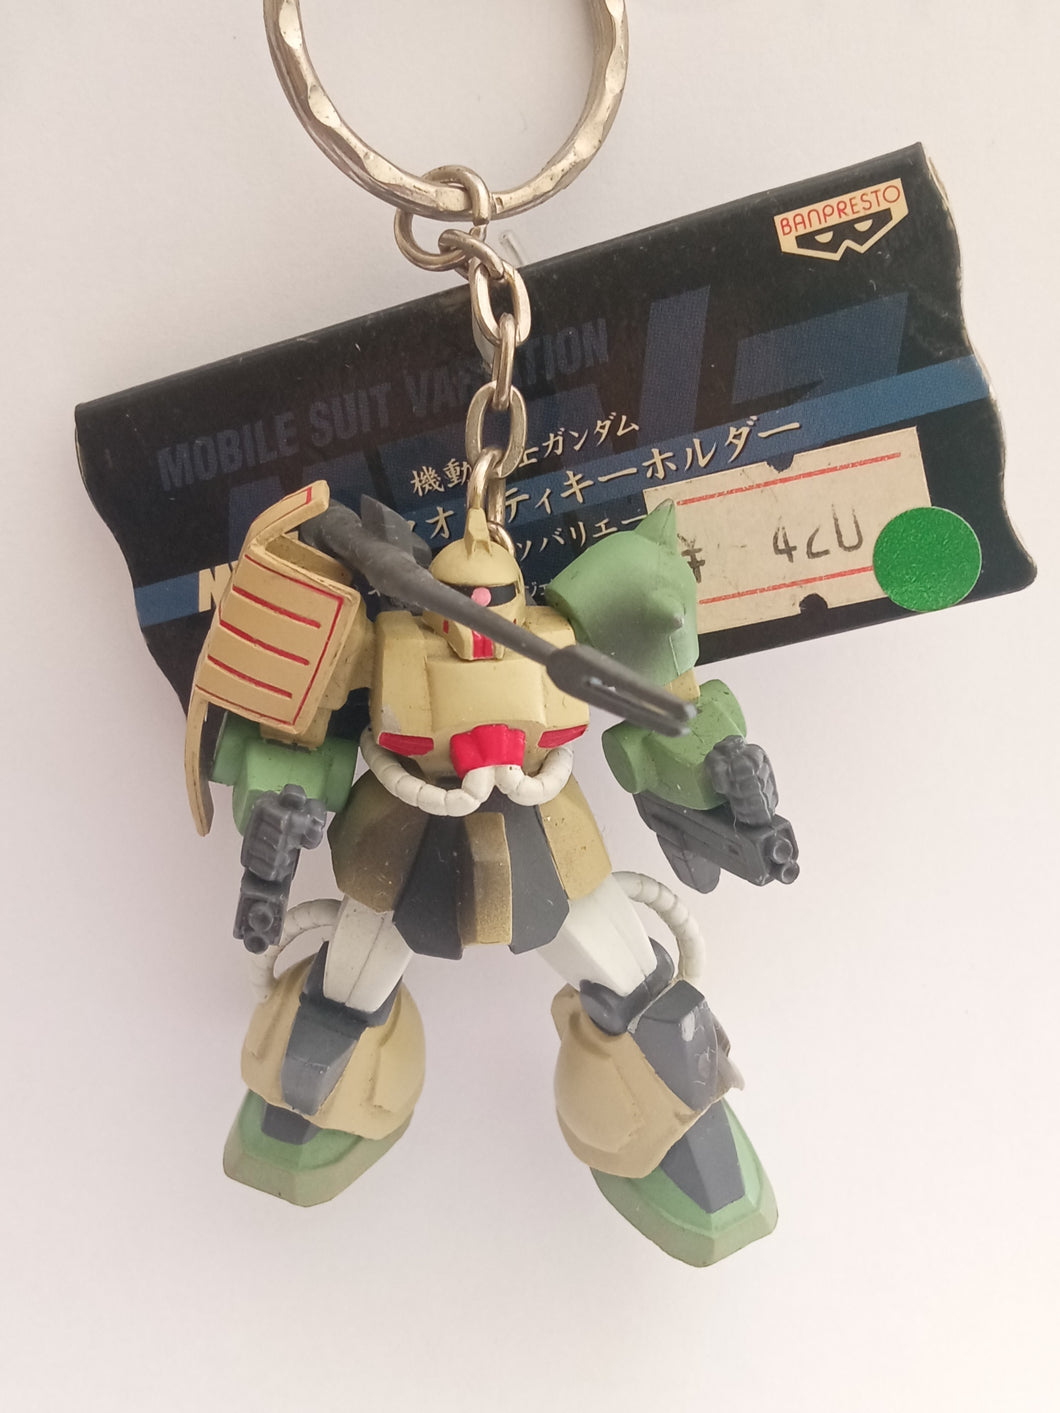 Mobile Suit Gundam Variation Figure Keychain Mascot Key Holder Strap